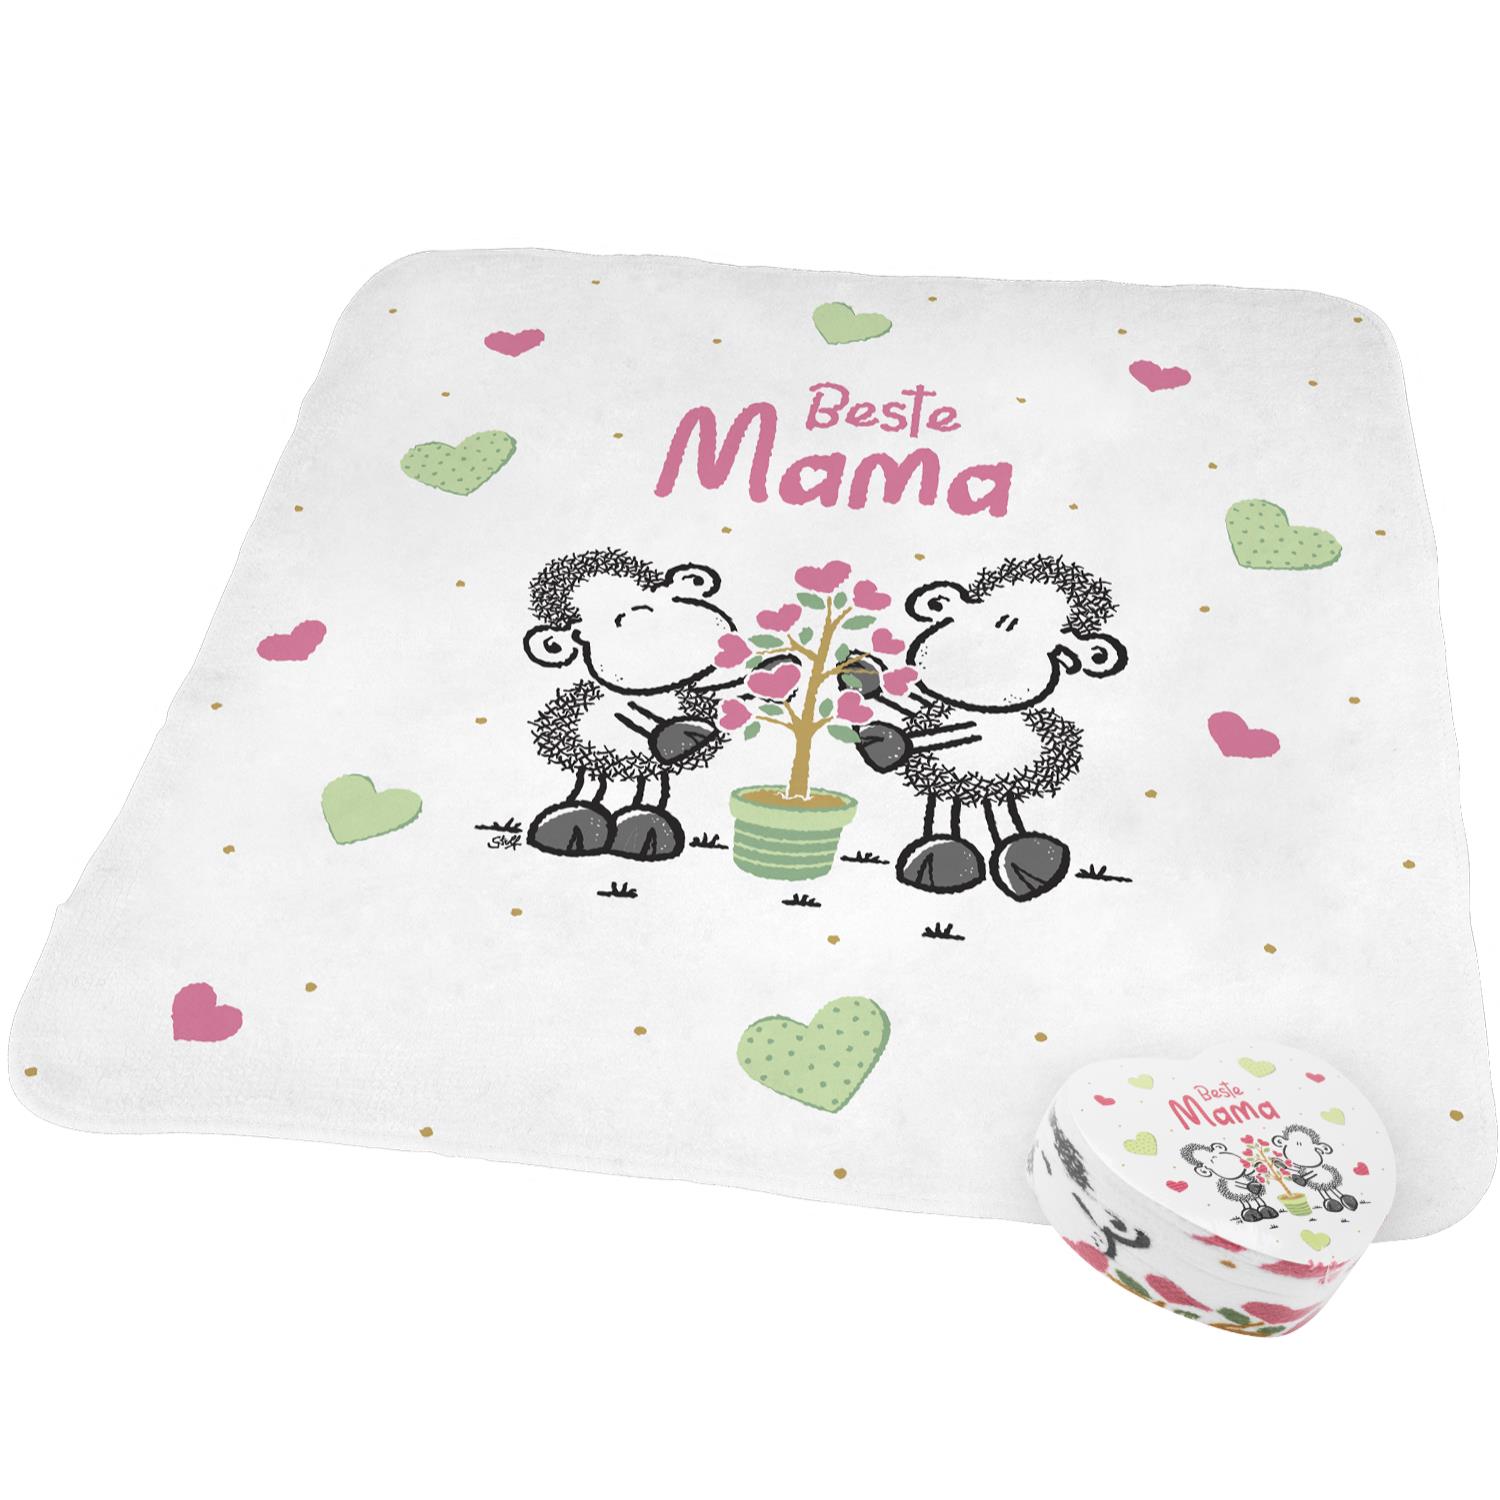 Magic Towel »Beste Mama«